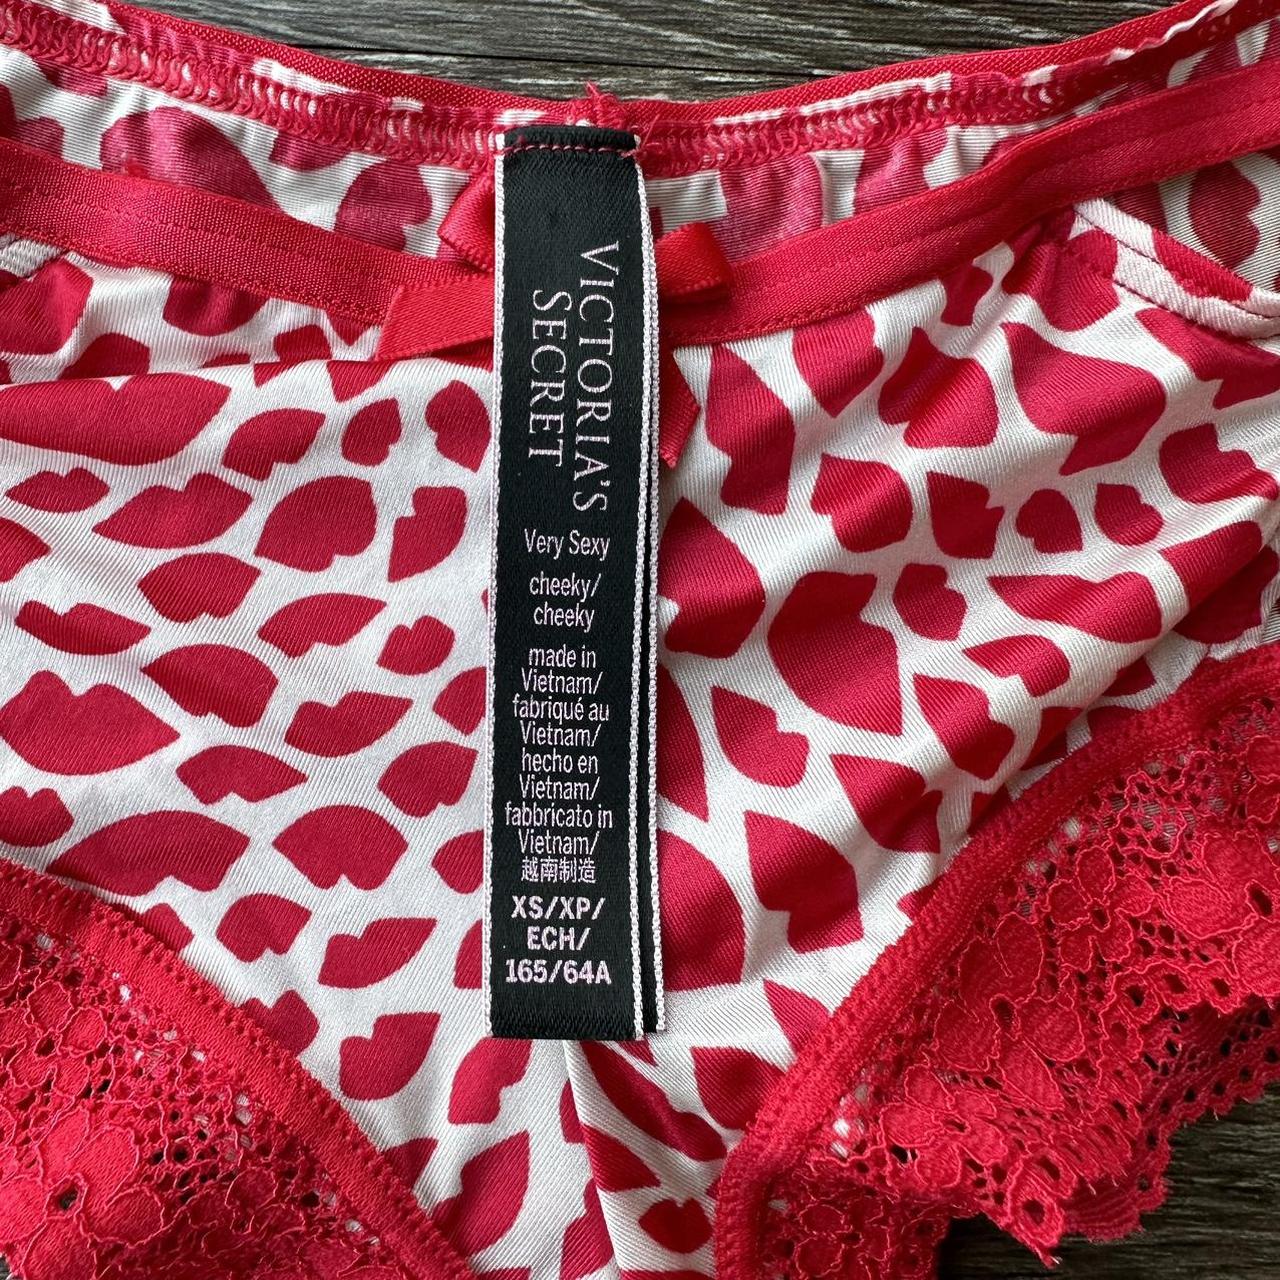 The Most Def | Leopard Print Cheeky Underwear